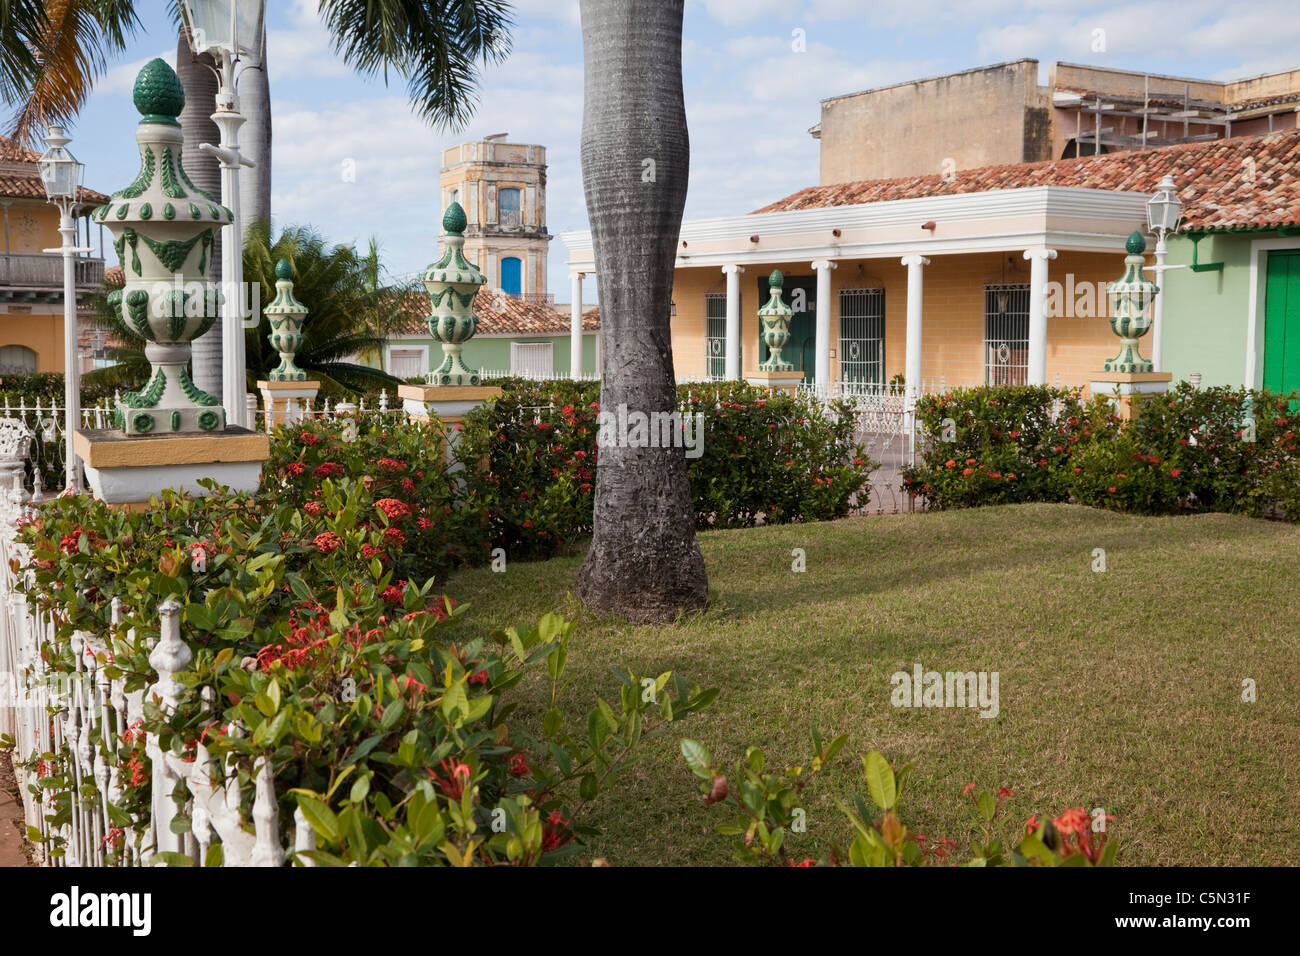 Cuba, Trinidad. Plaza Mayor. Tower of the Palacio Cantero in rear center, now the Museo Historico Municipal. Stock Photo